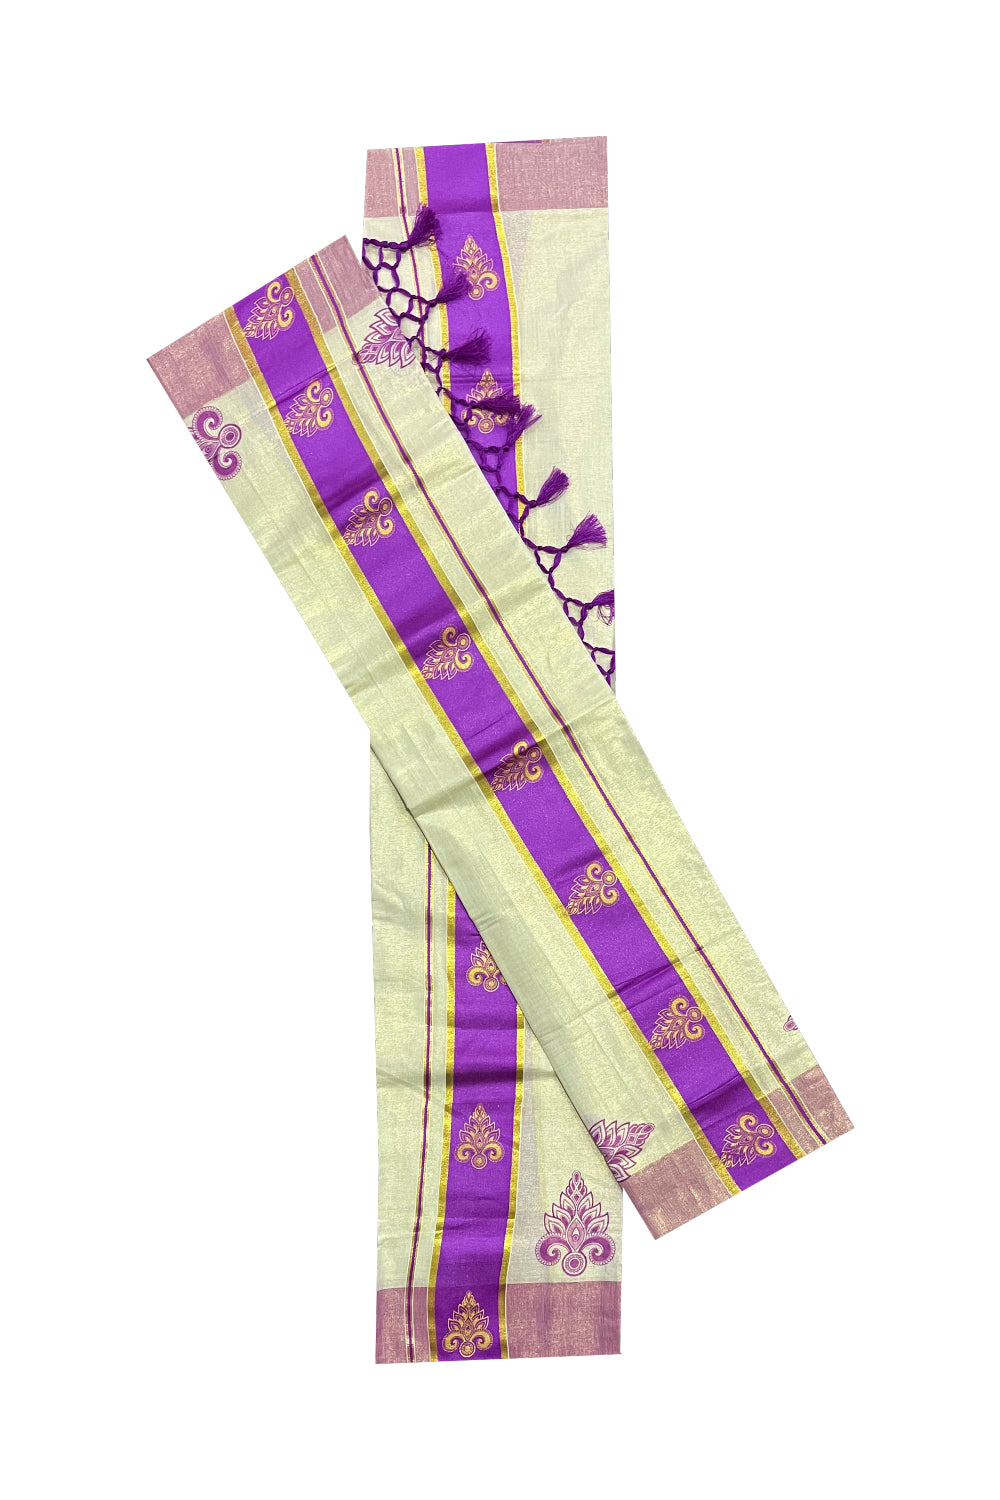 Kerala Tissue Kasavu Set Mundu (Mundum Neriyathum) with Golden and Violet Block Prints and Tassels